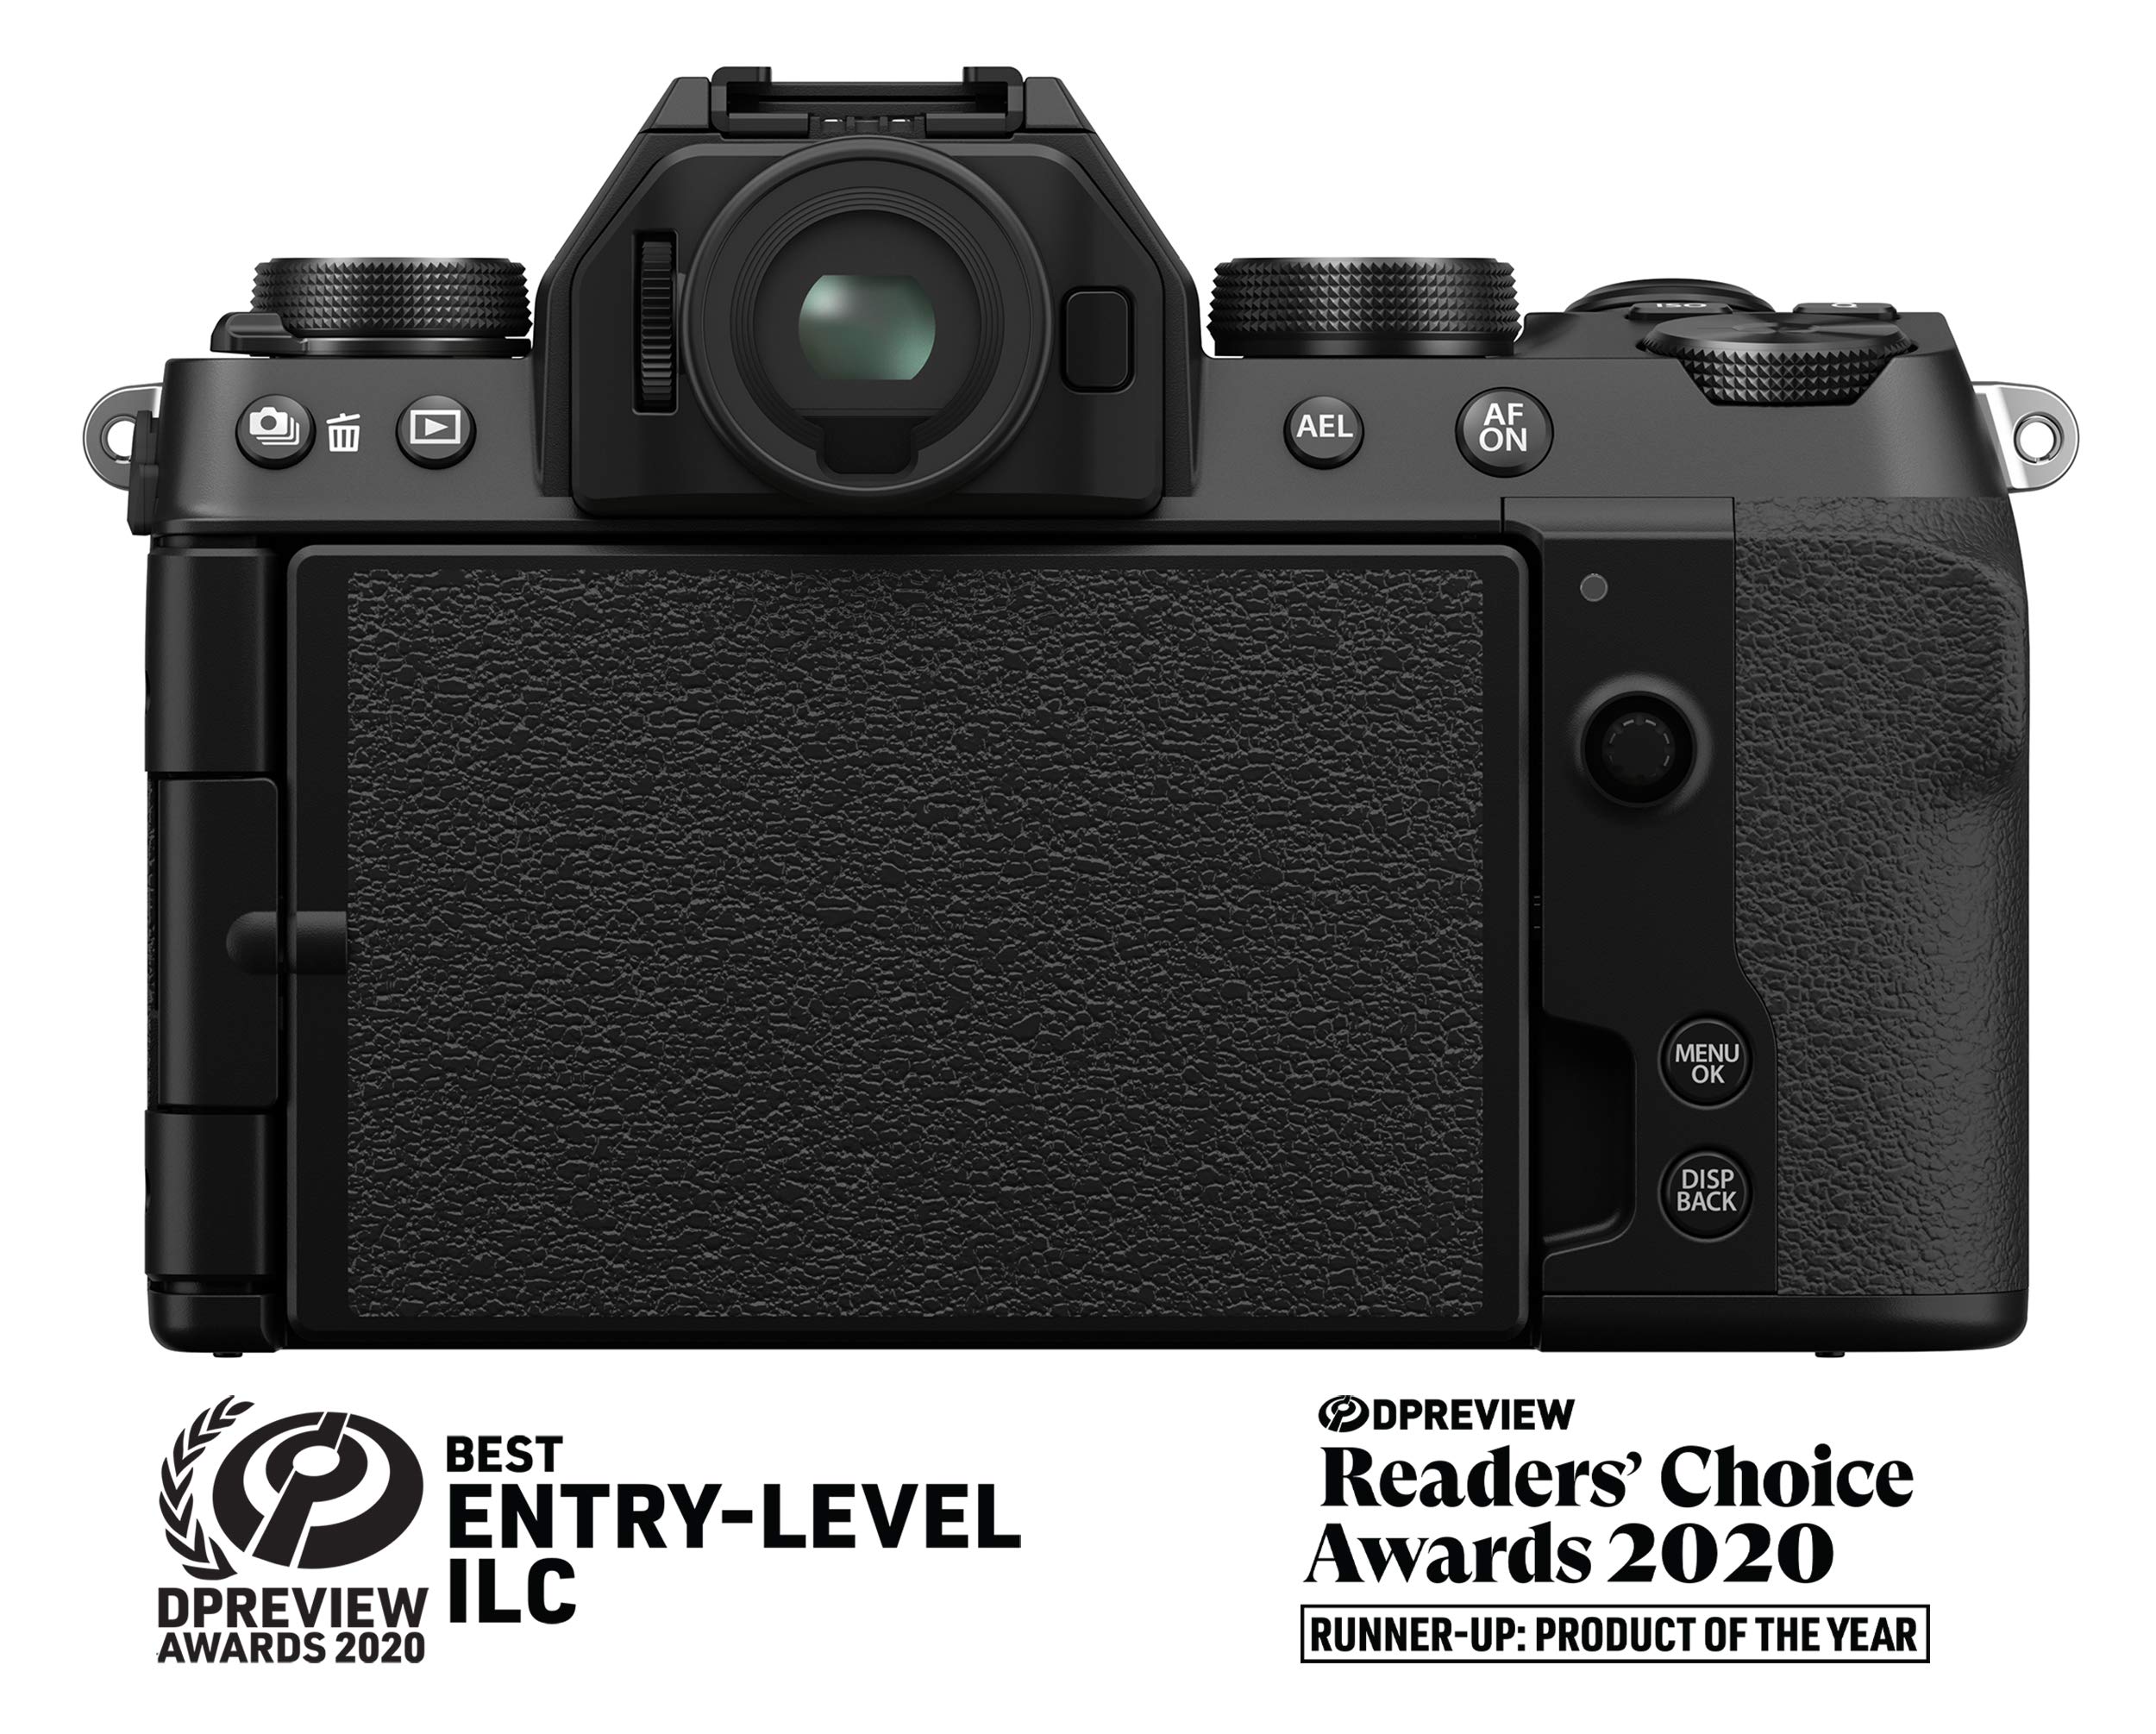 Fujifilm X-S10 Mirrorless Digital Camera XF16-80mm Lens Kit - Black